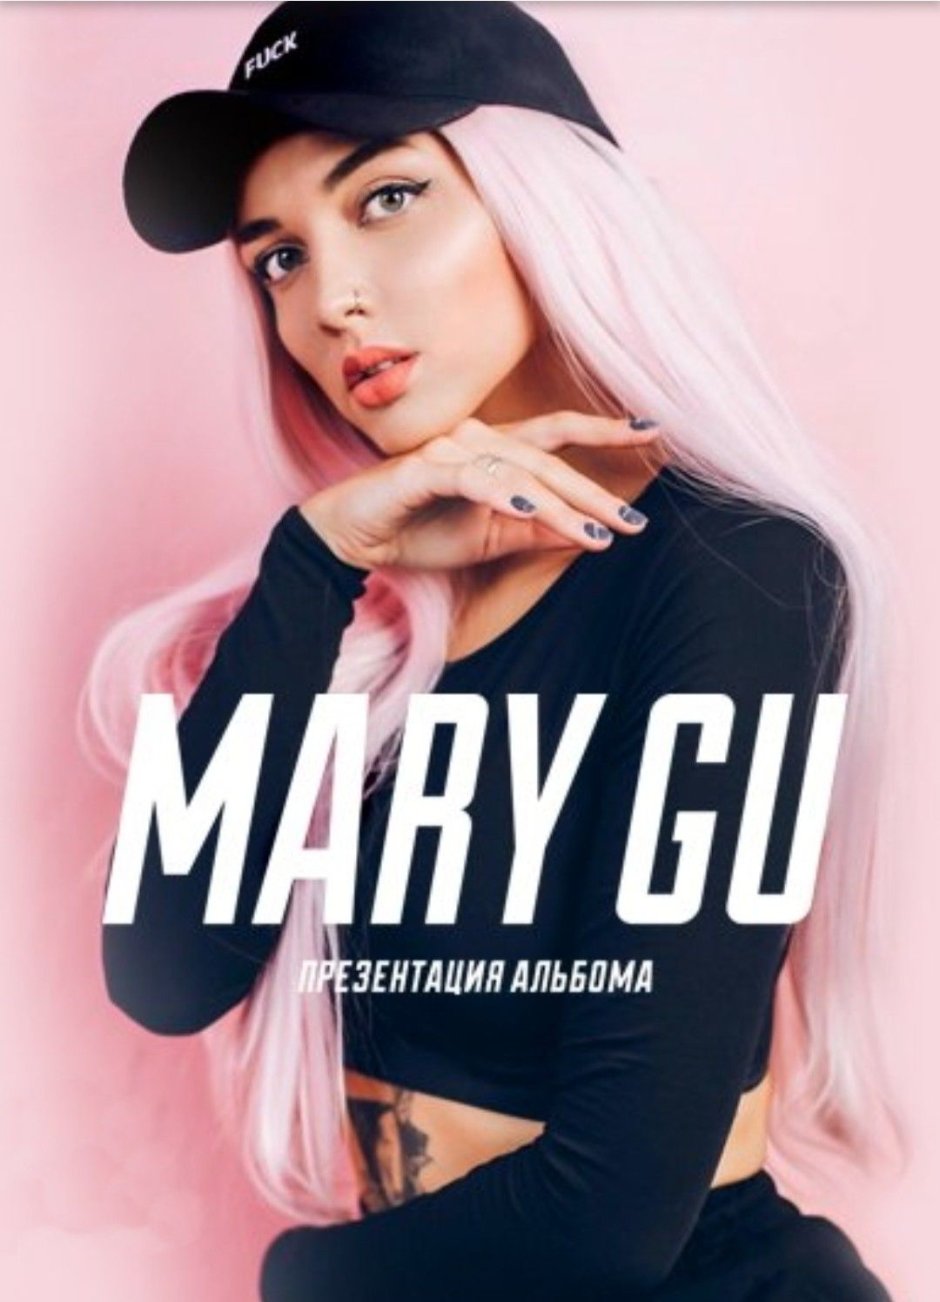 Mary gu